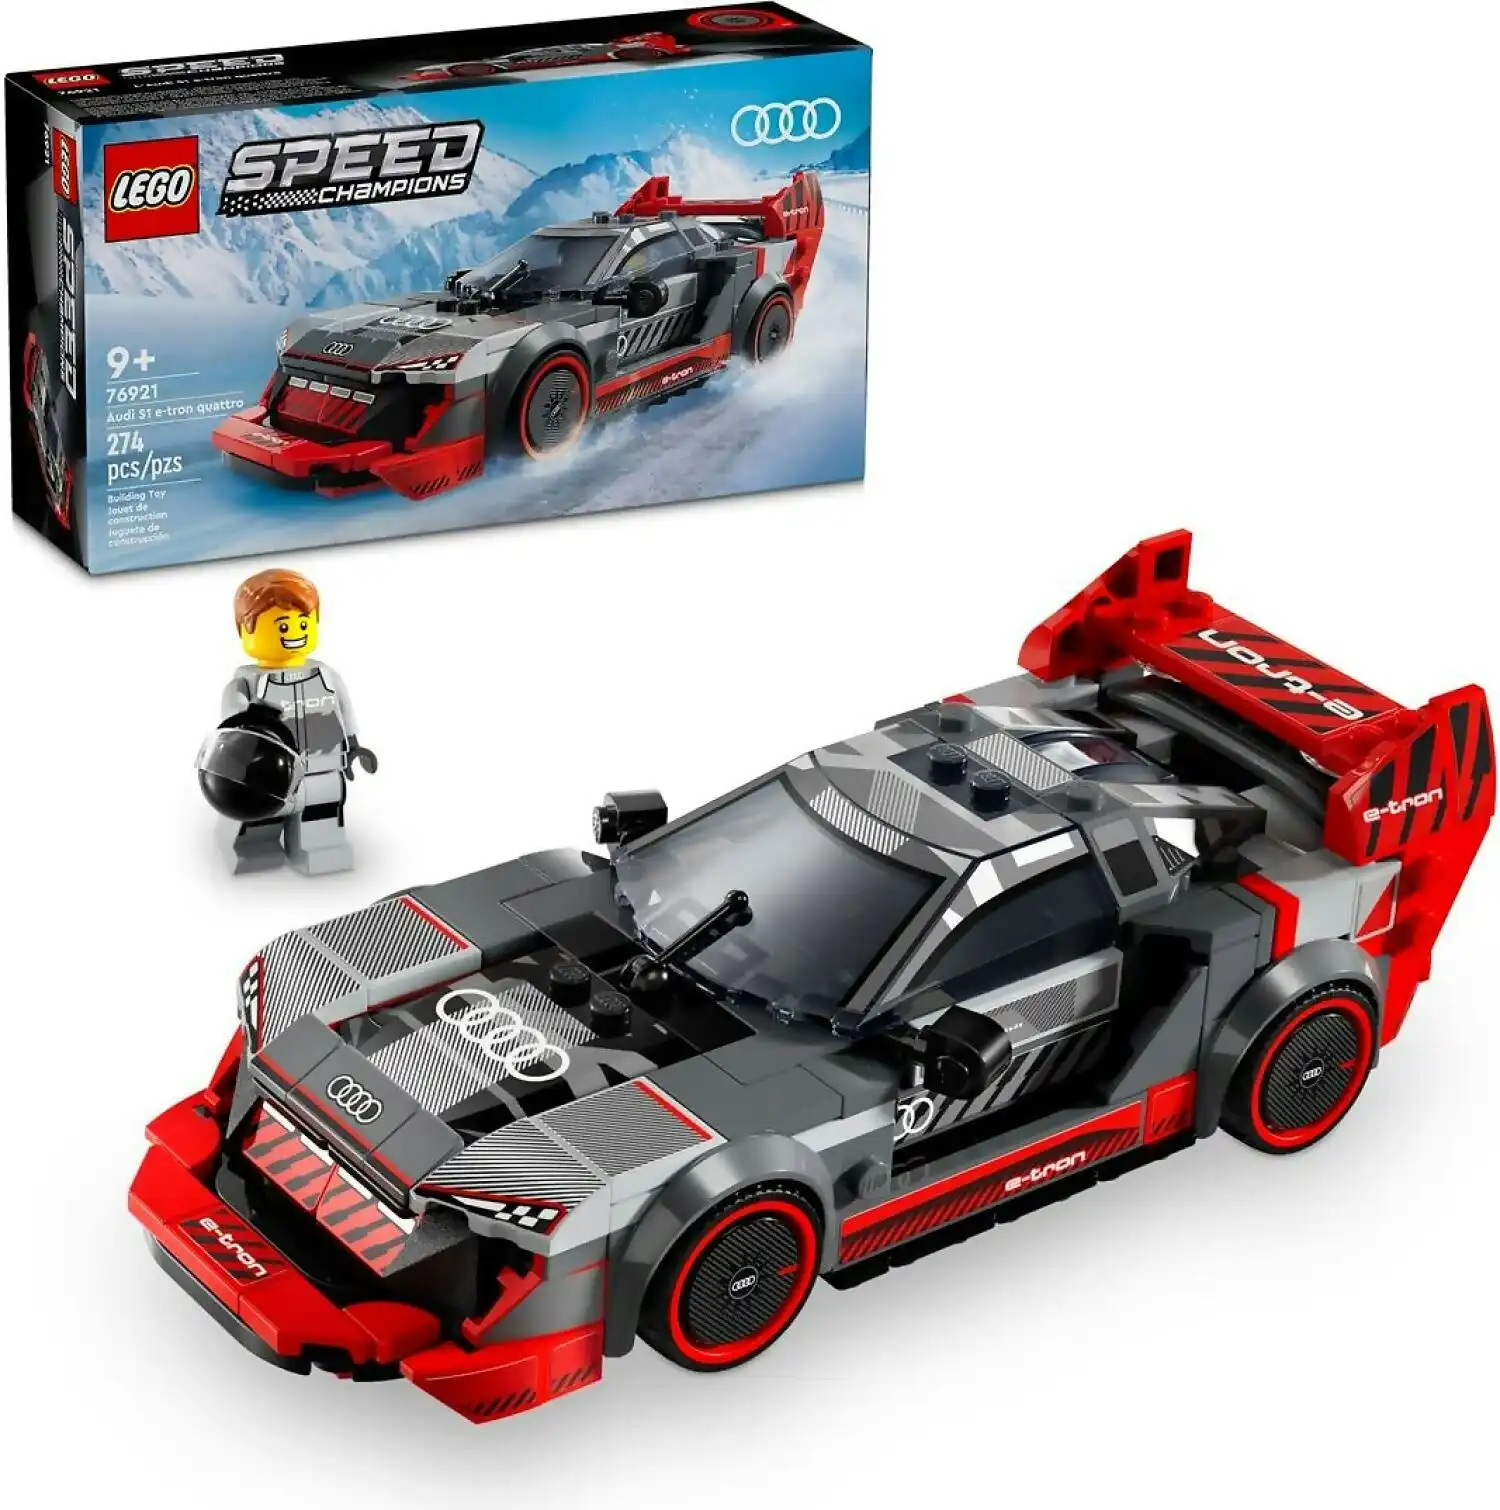 LEGO 76921 Audi S1 e-tron quattro Race Car - Speed Champions